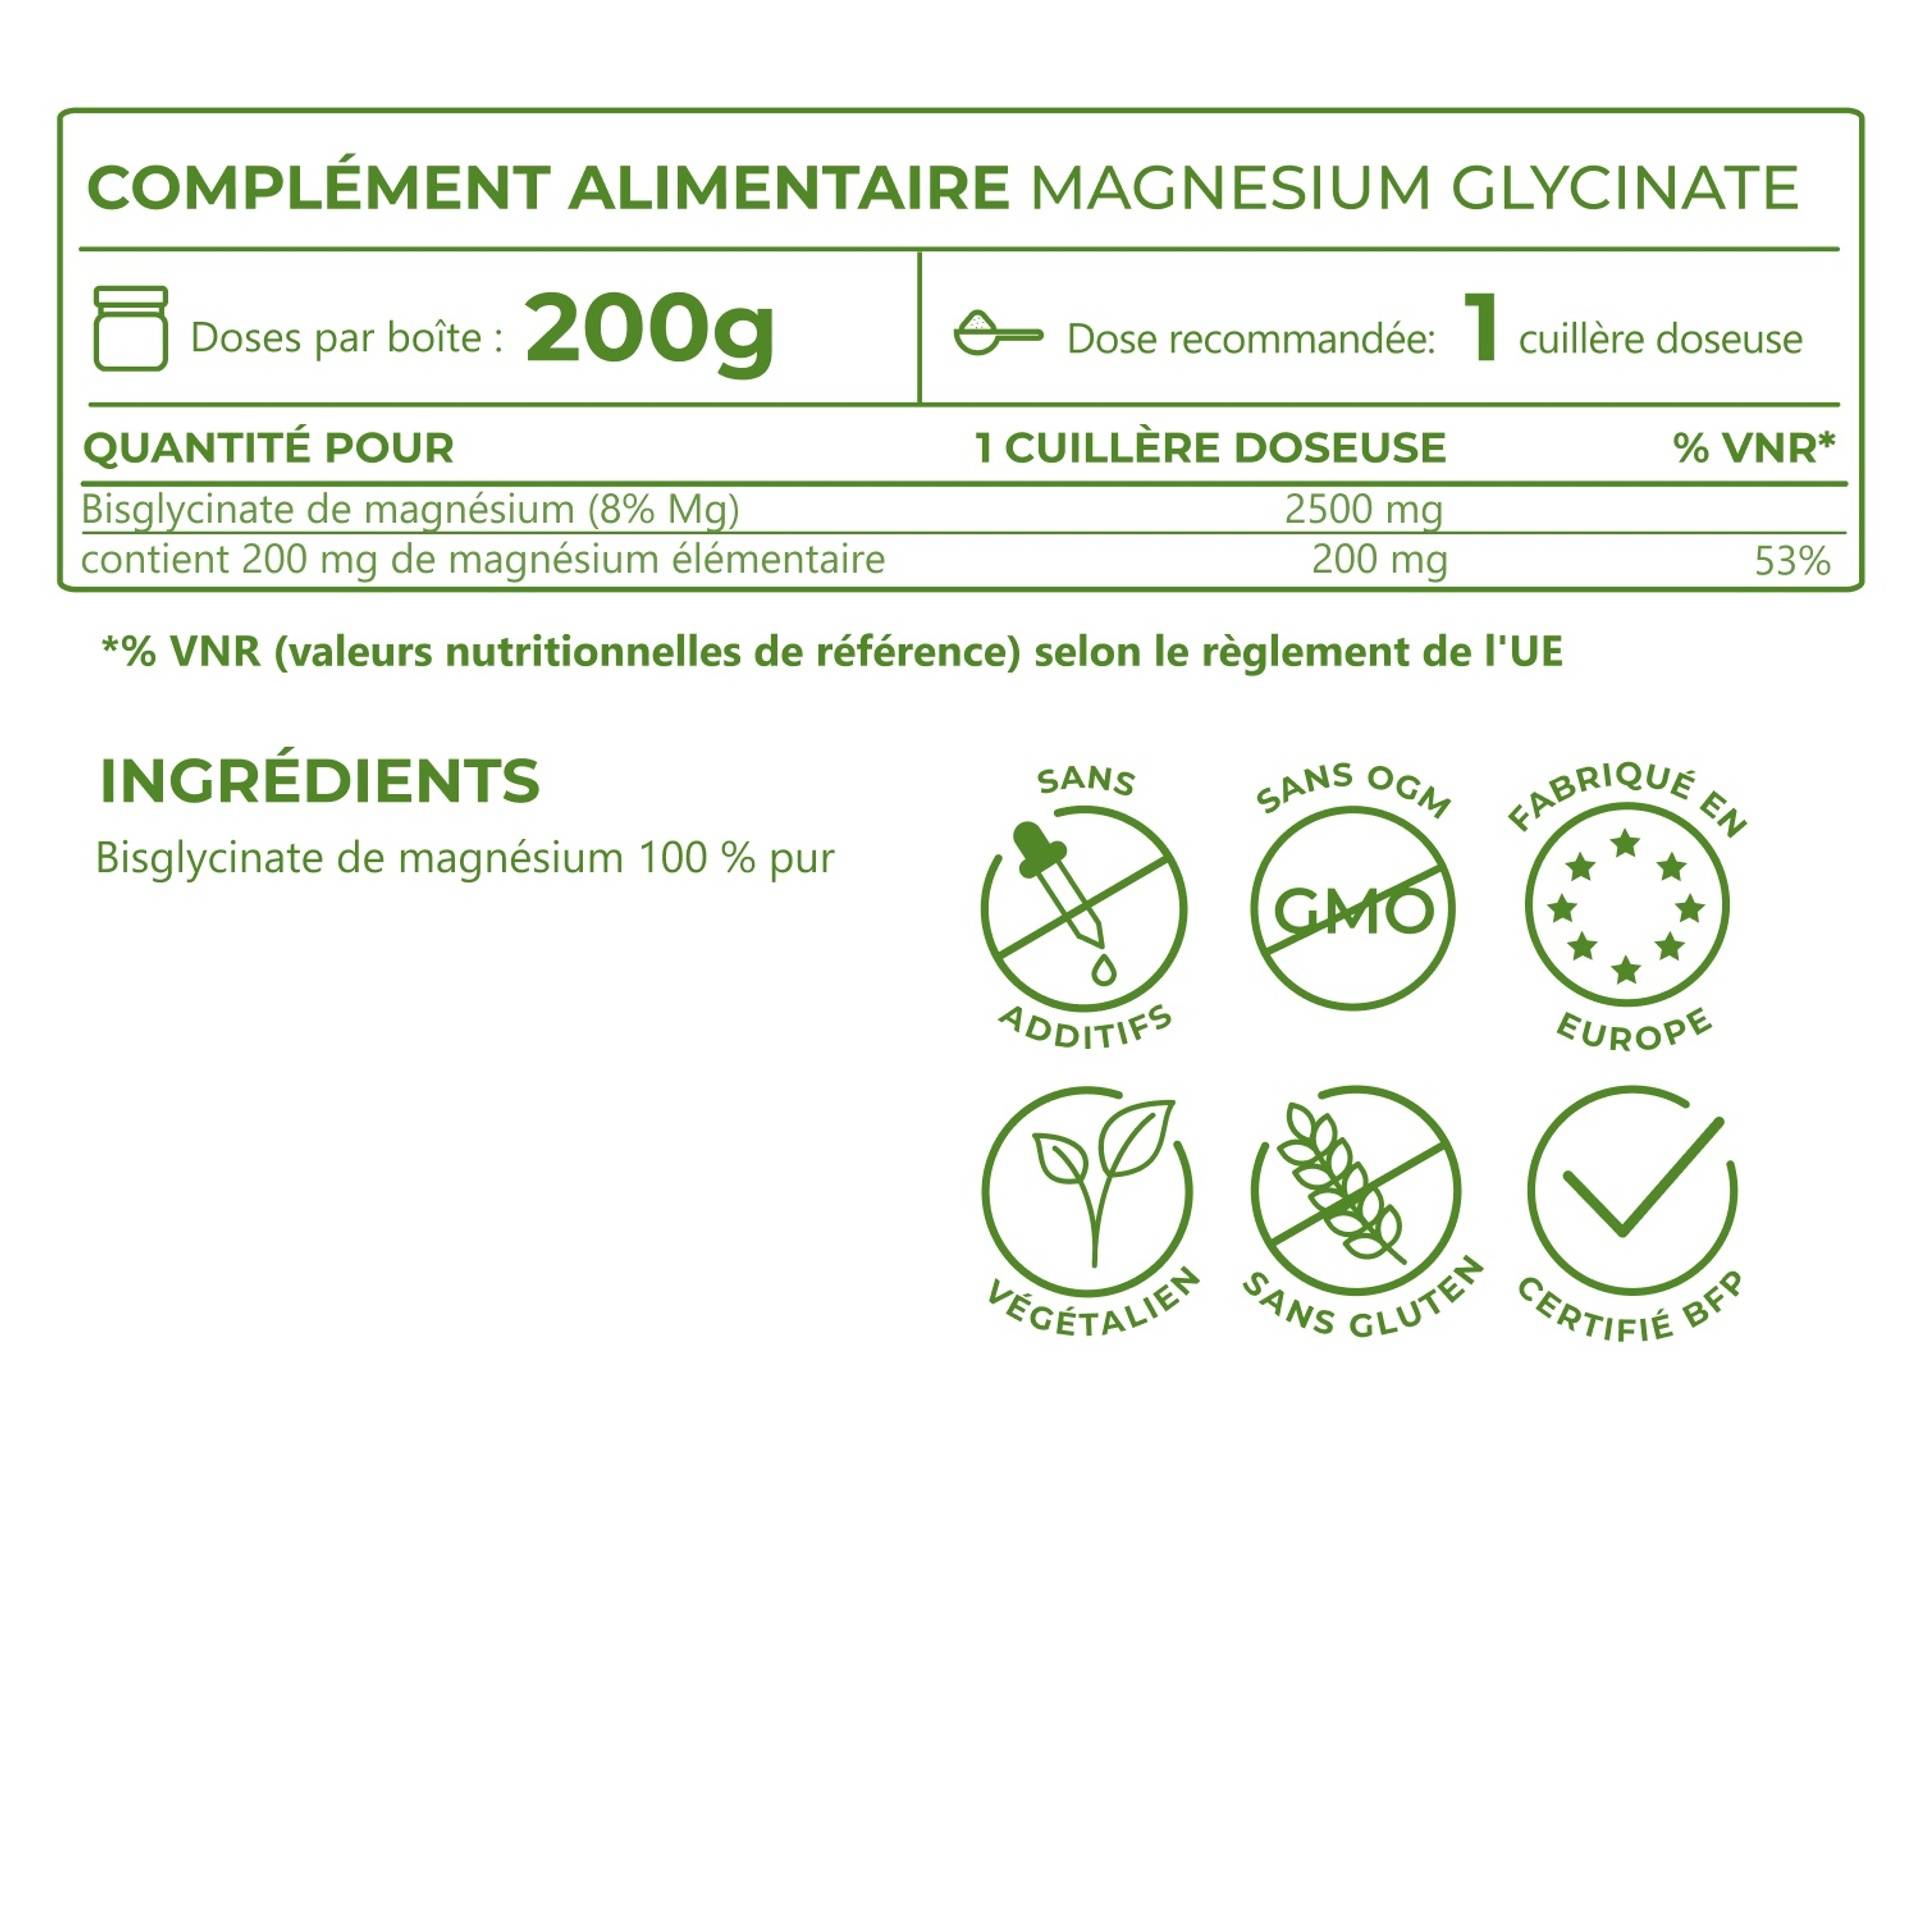 5_Ingredients_Magnesium Glycinat Powder_6973-0C_FR.png